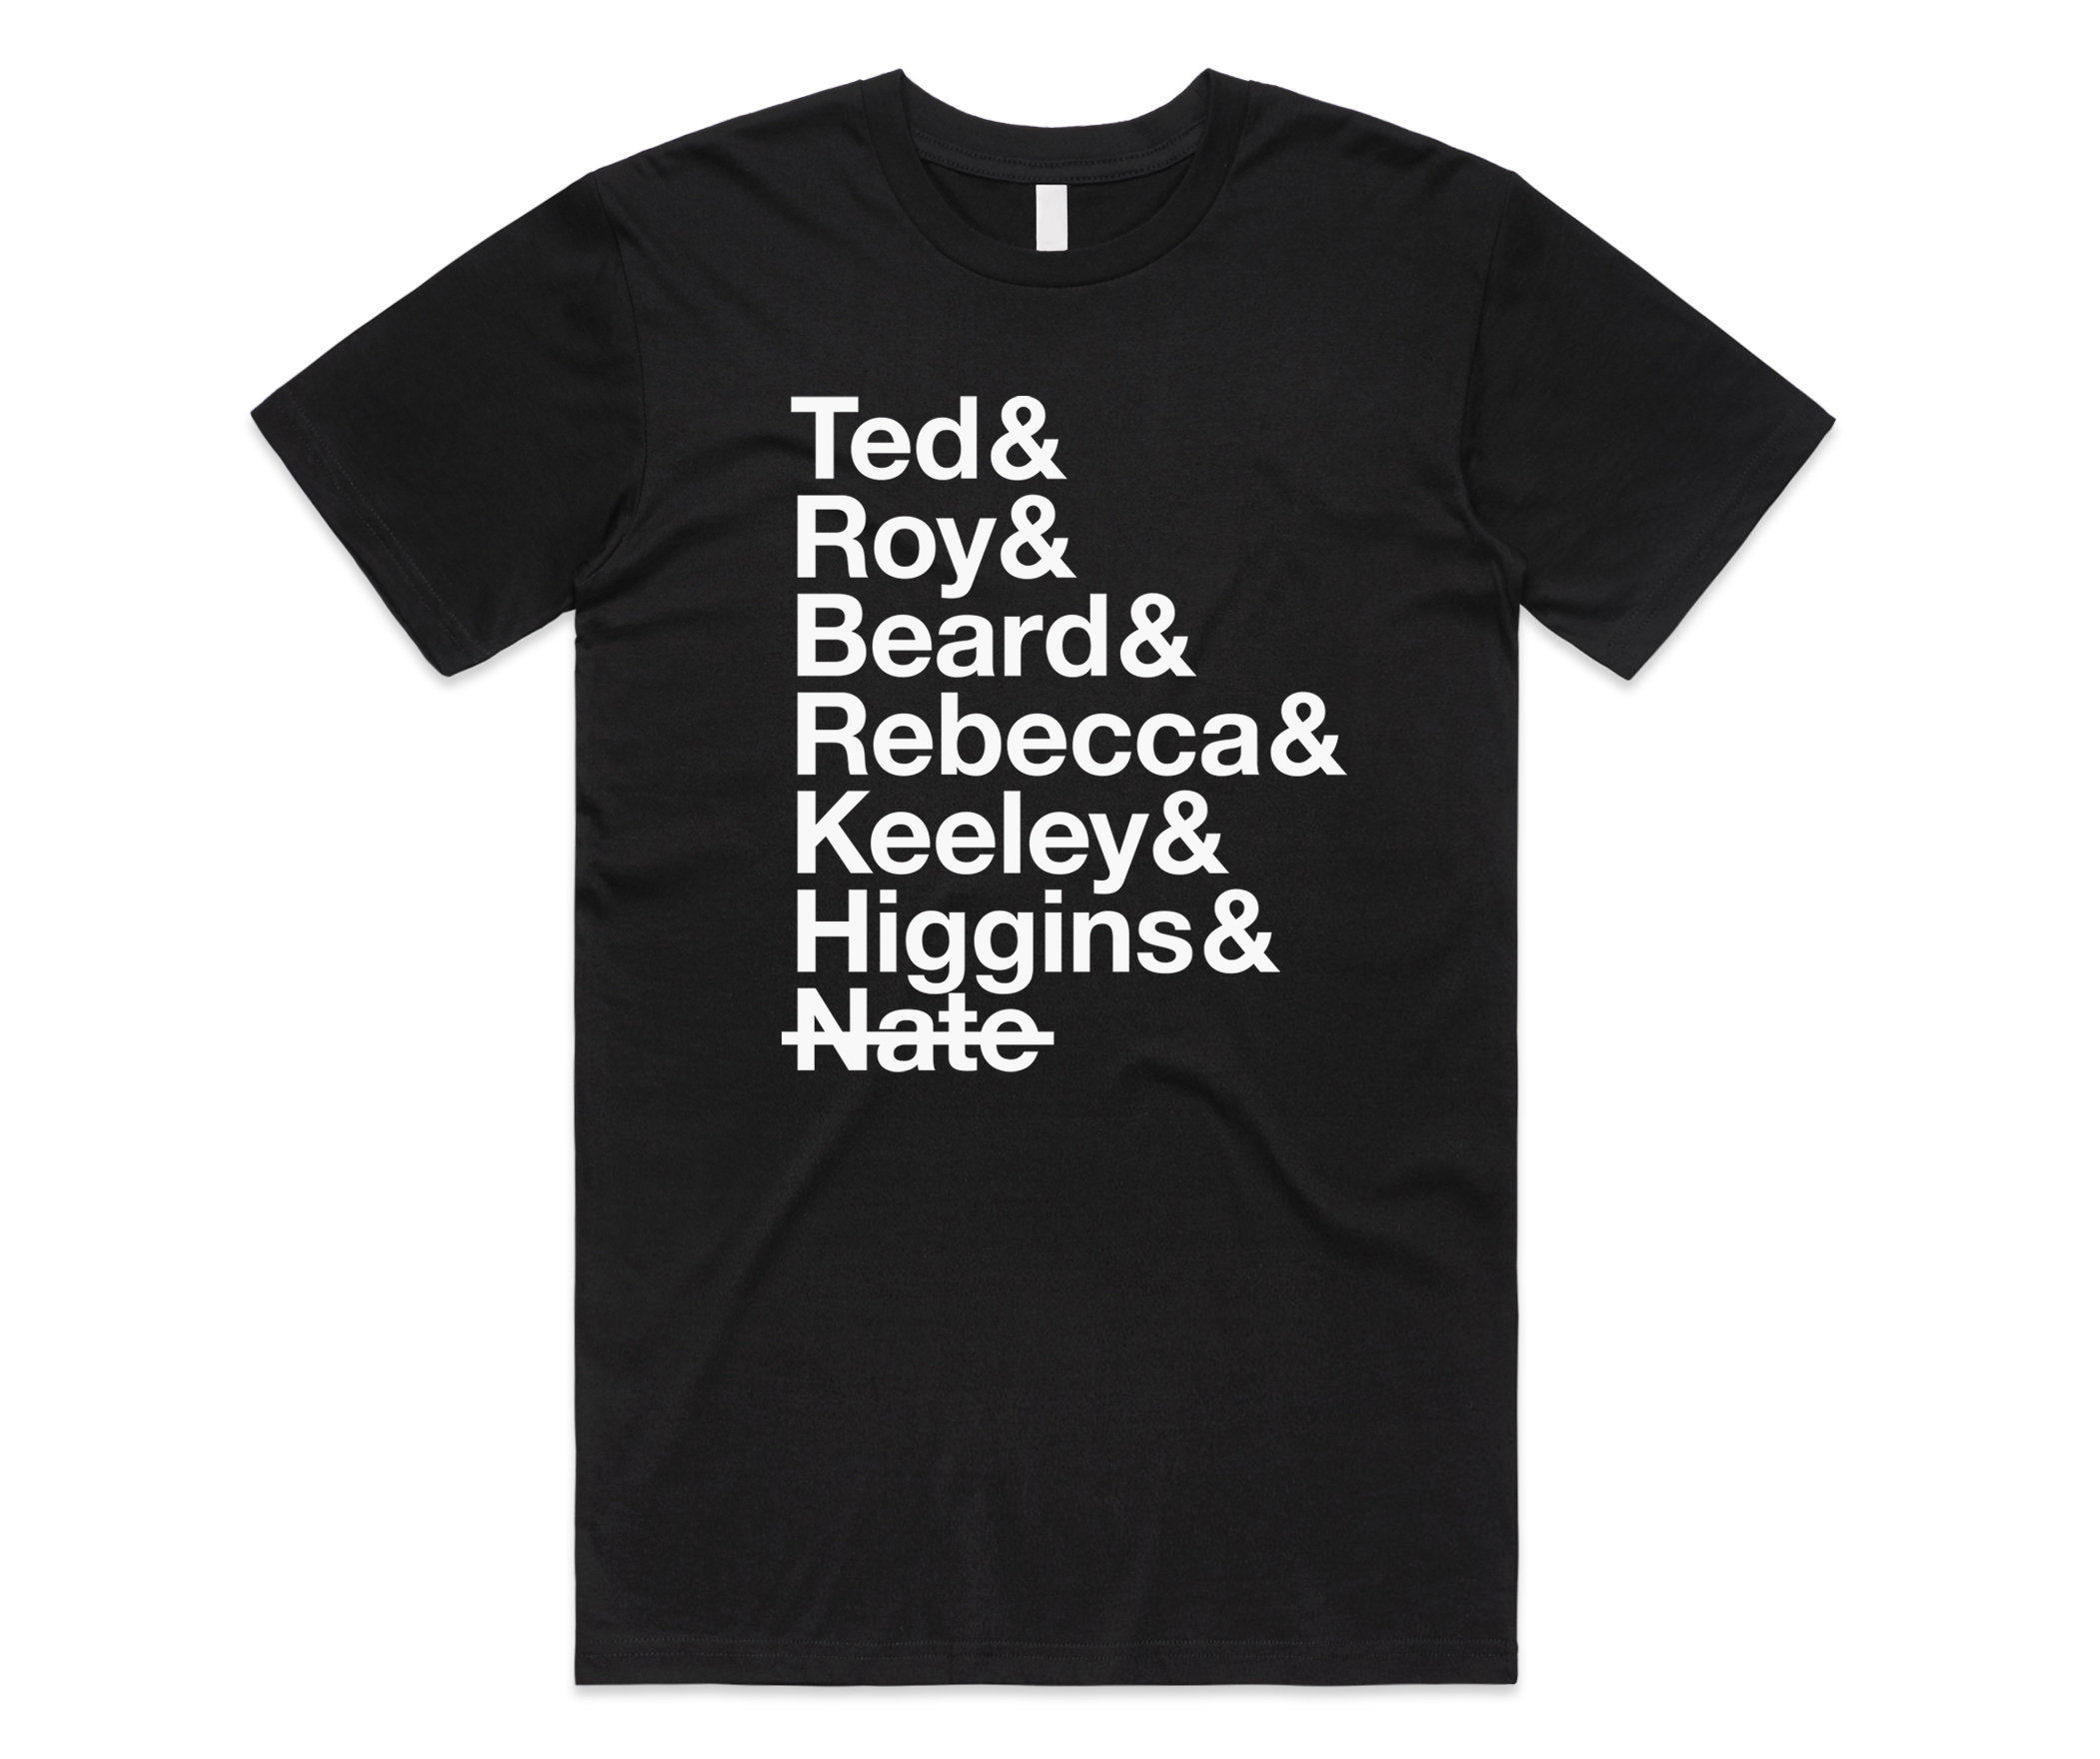 Ted Roy Beard Rebecca Keeley T-Shirt Tee Top Funny Tv Show Gift Men’s Women’s